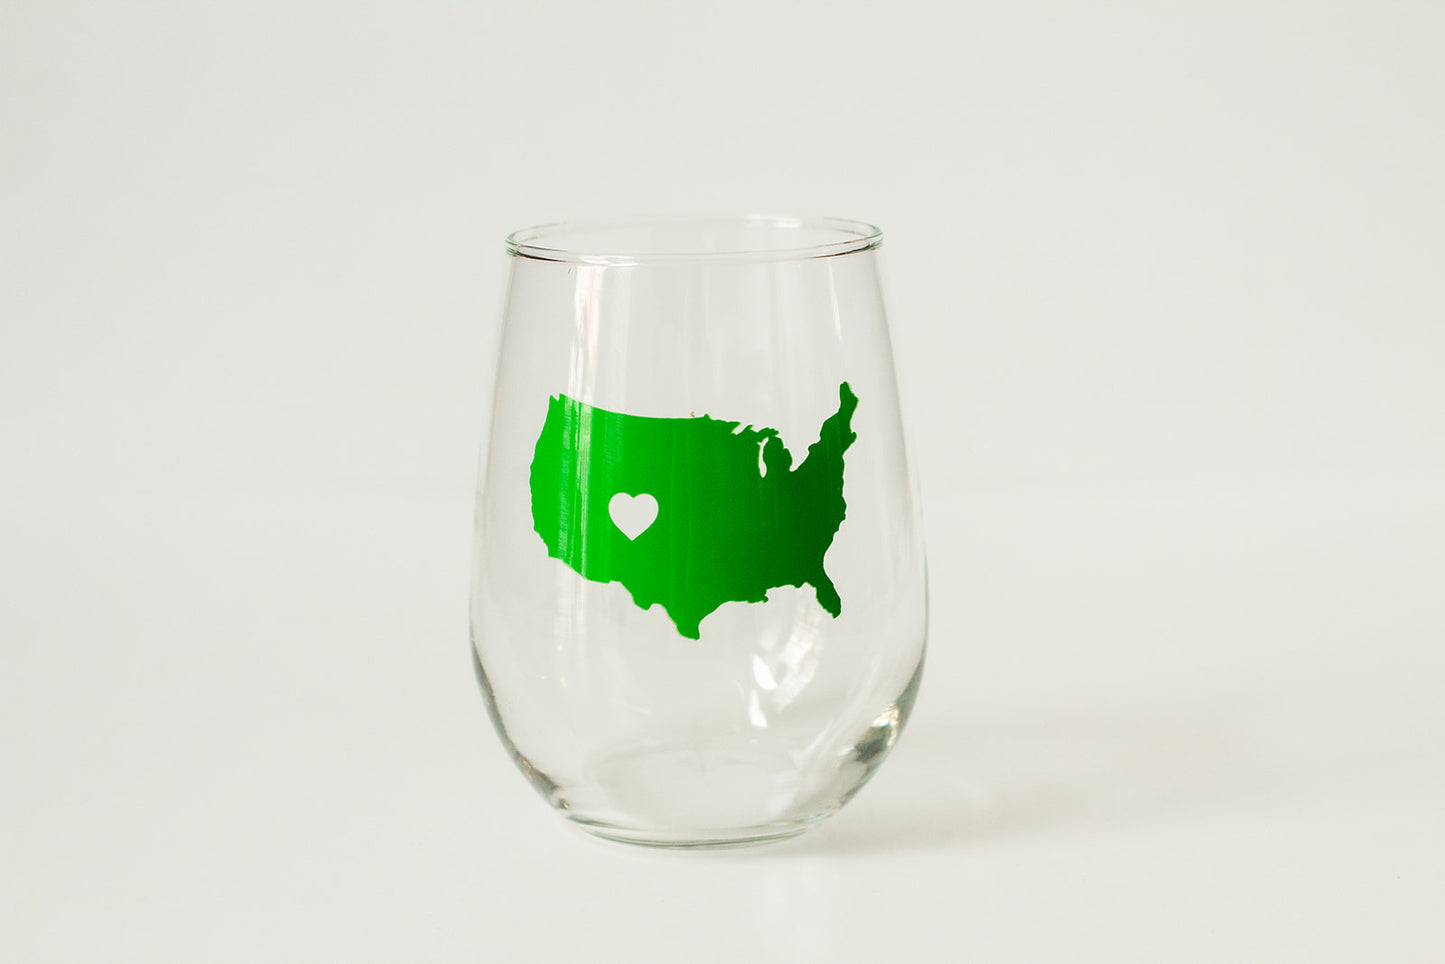 Colorado (CO) Wine Glass